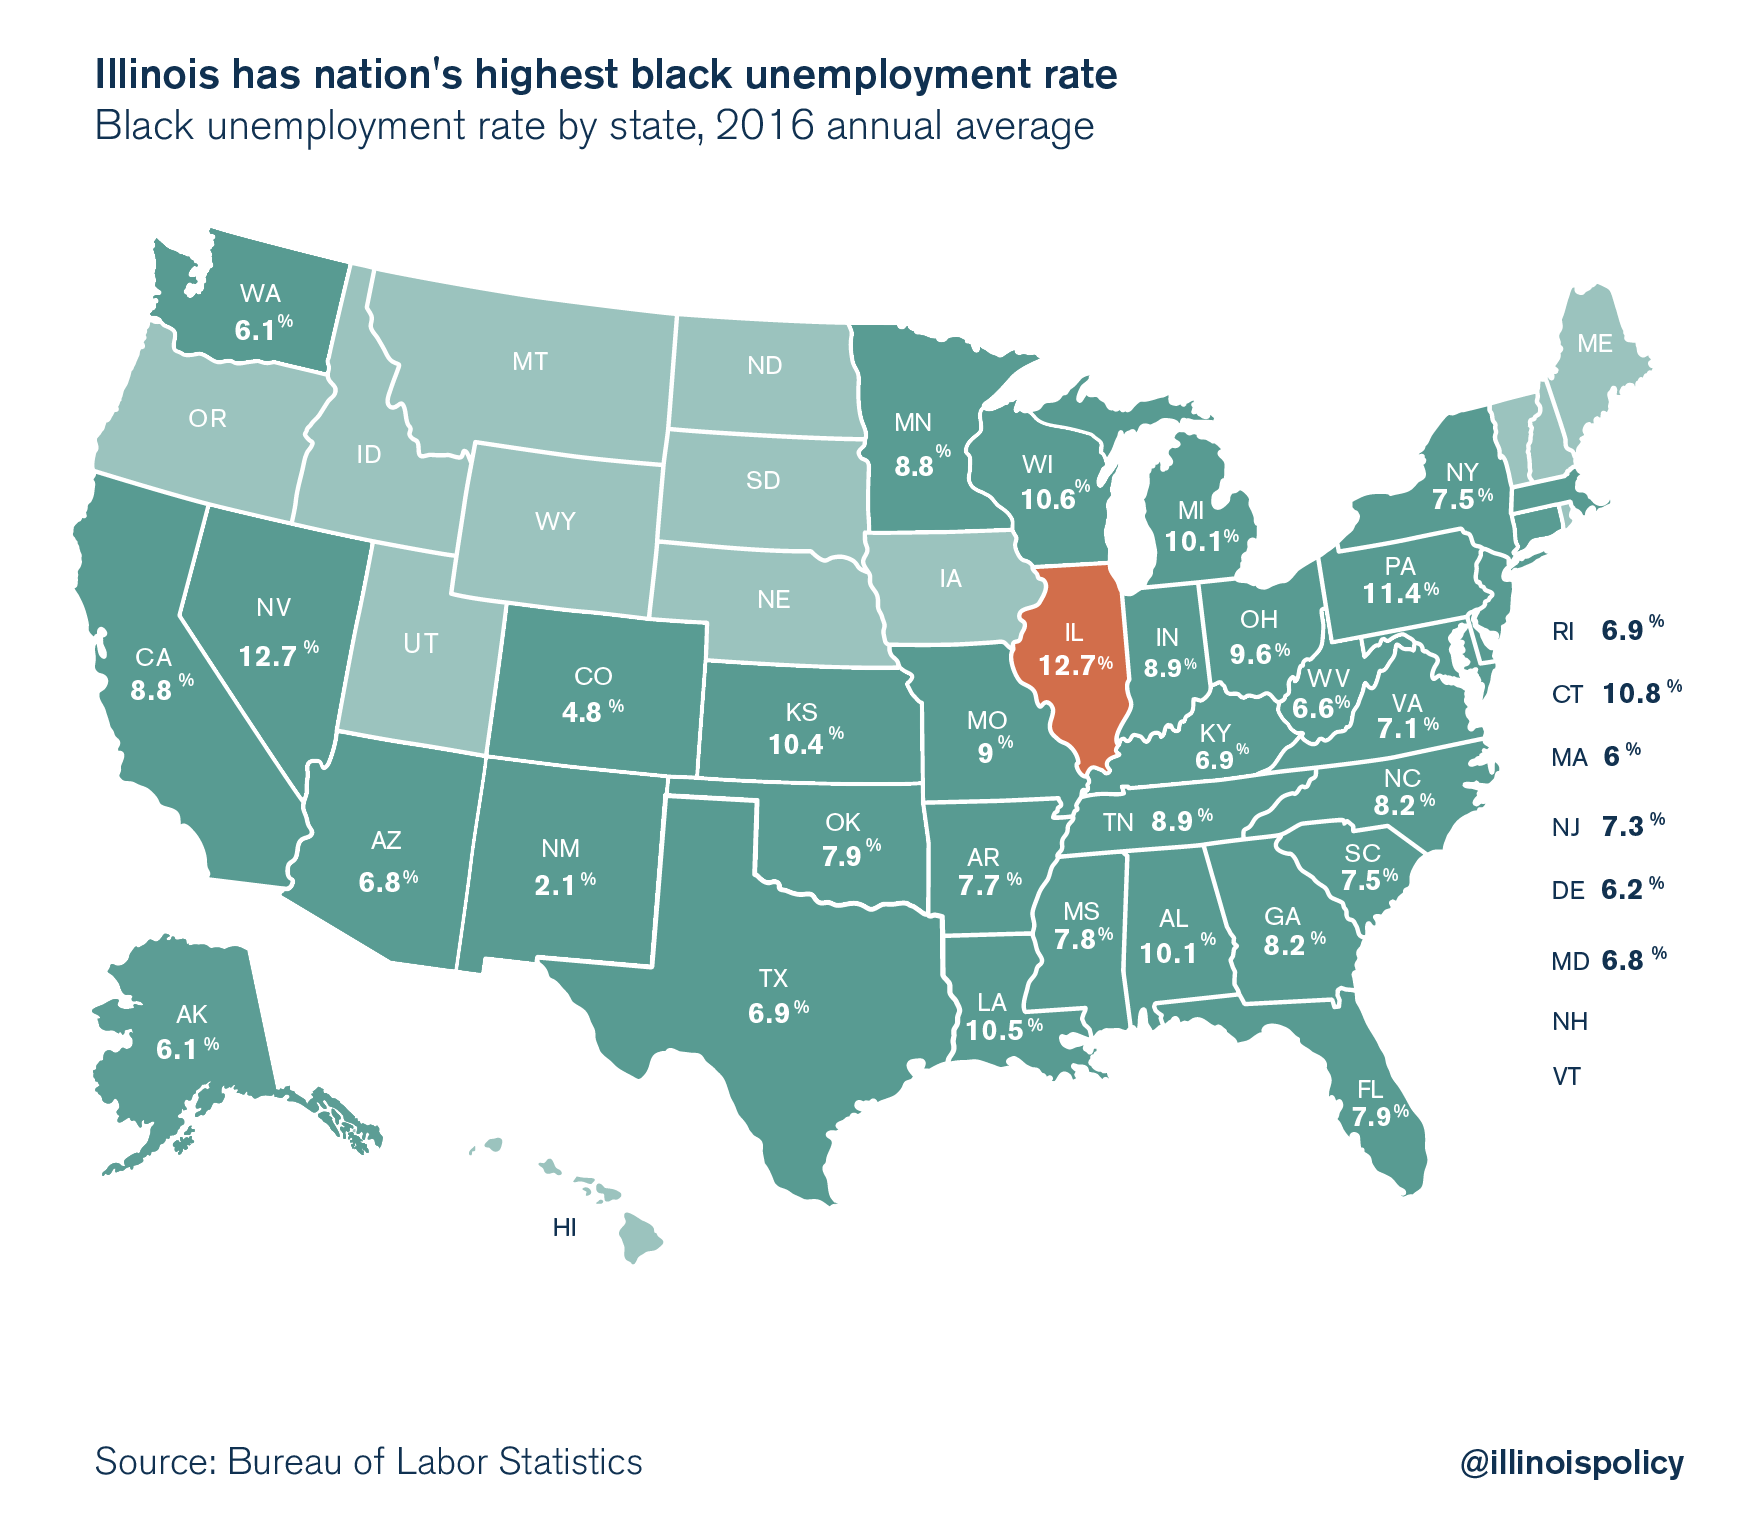 Illinois has the nation's highest black unemployment rate